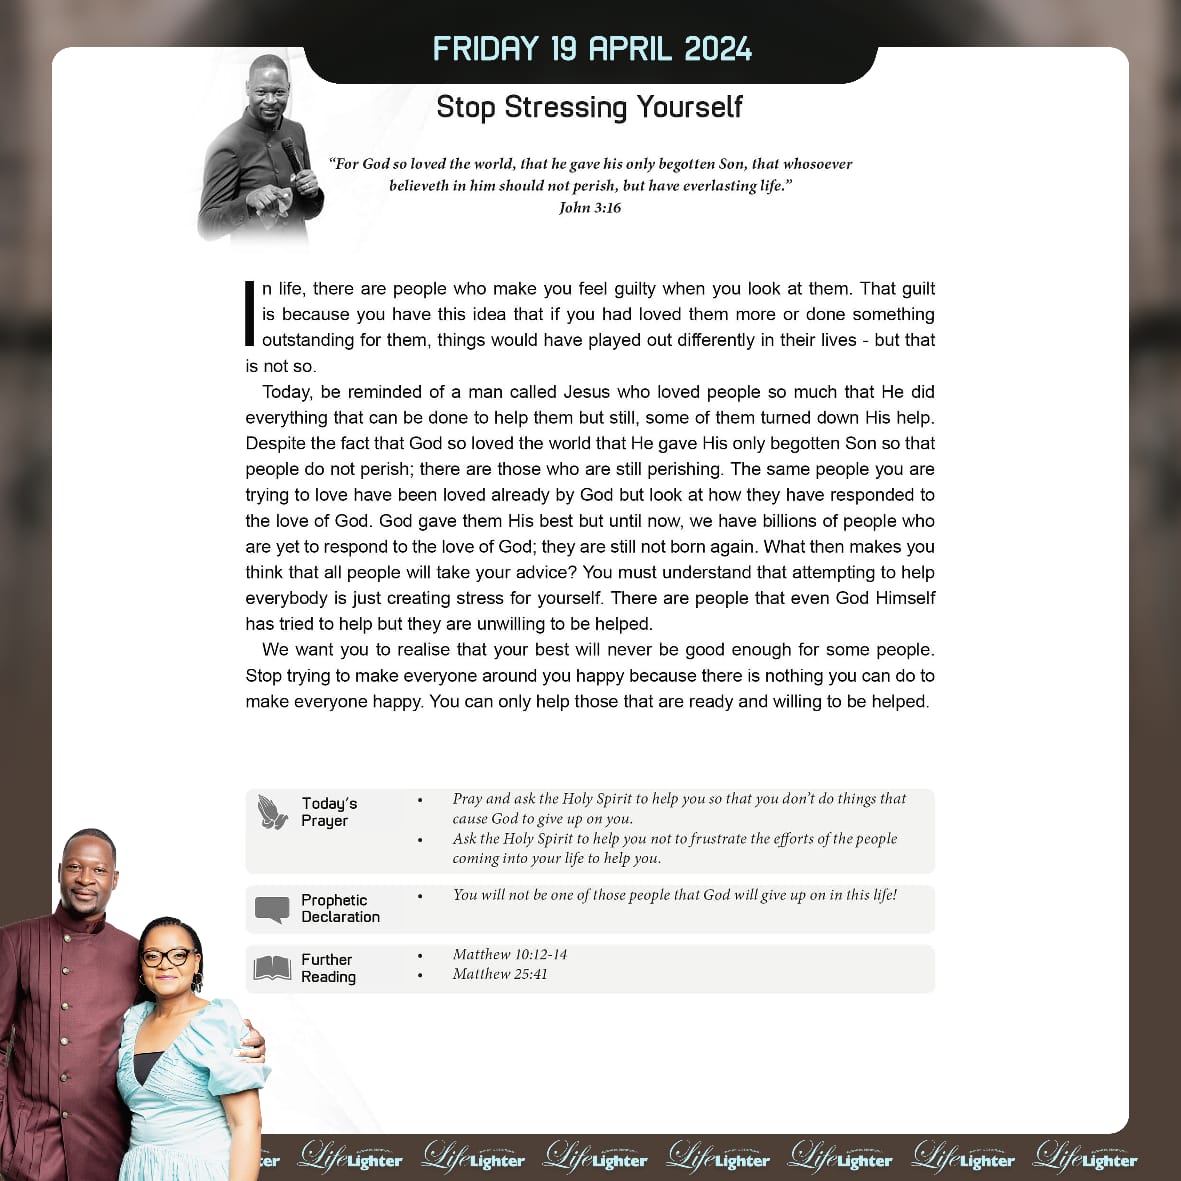 Friday 19 April 2024
Stop Stressing Yourself. 
#LifeLighter #DailyDevotional #EmmanuelMakandiwa #RuthEmmanuelMakandiwa